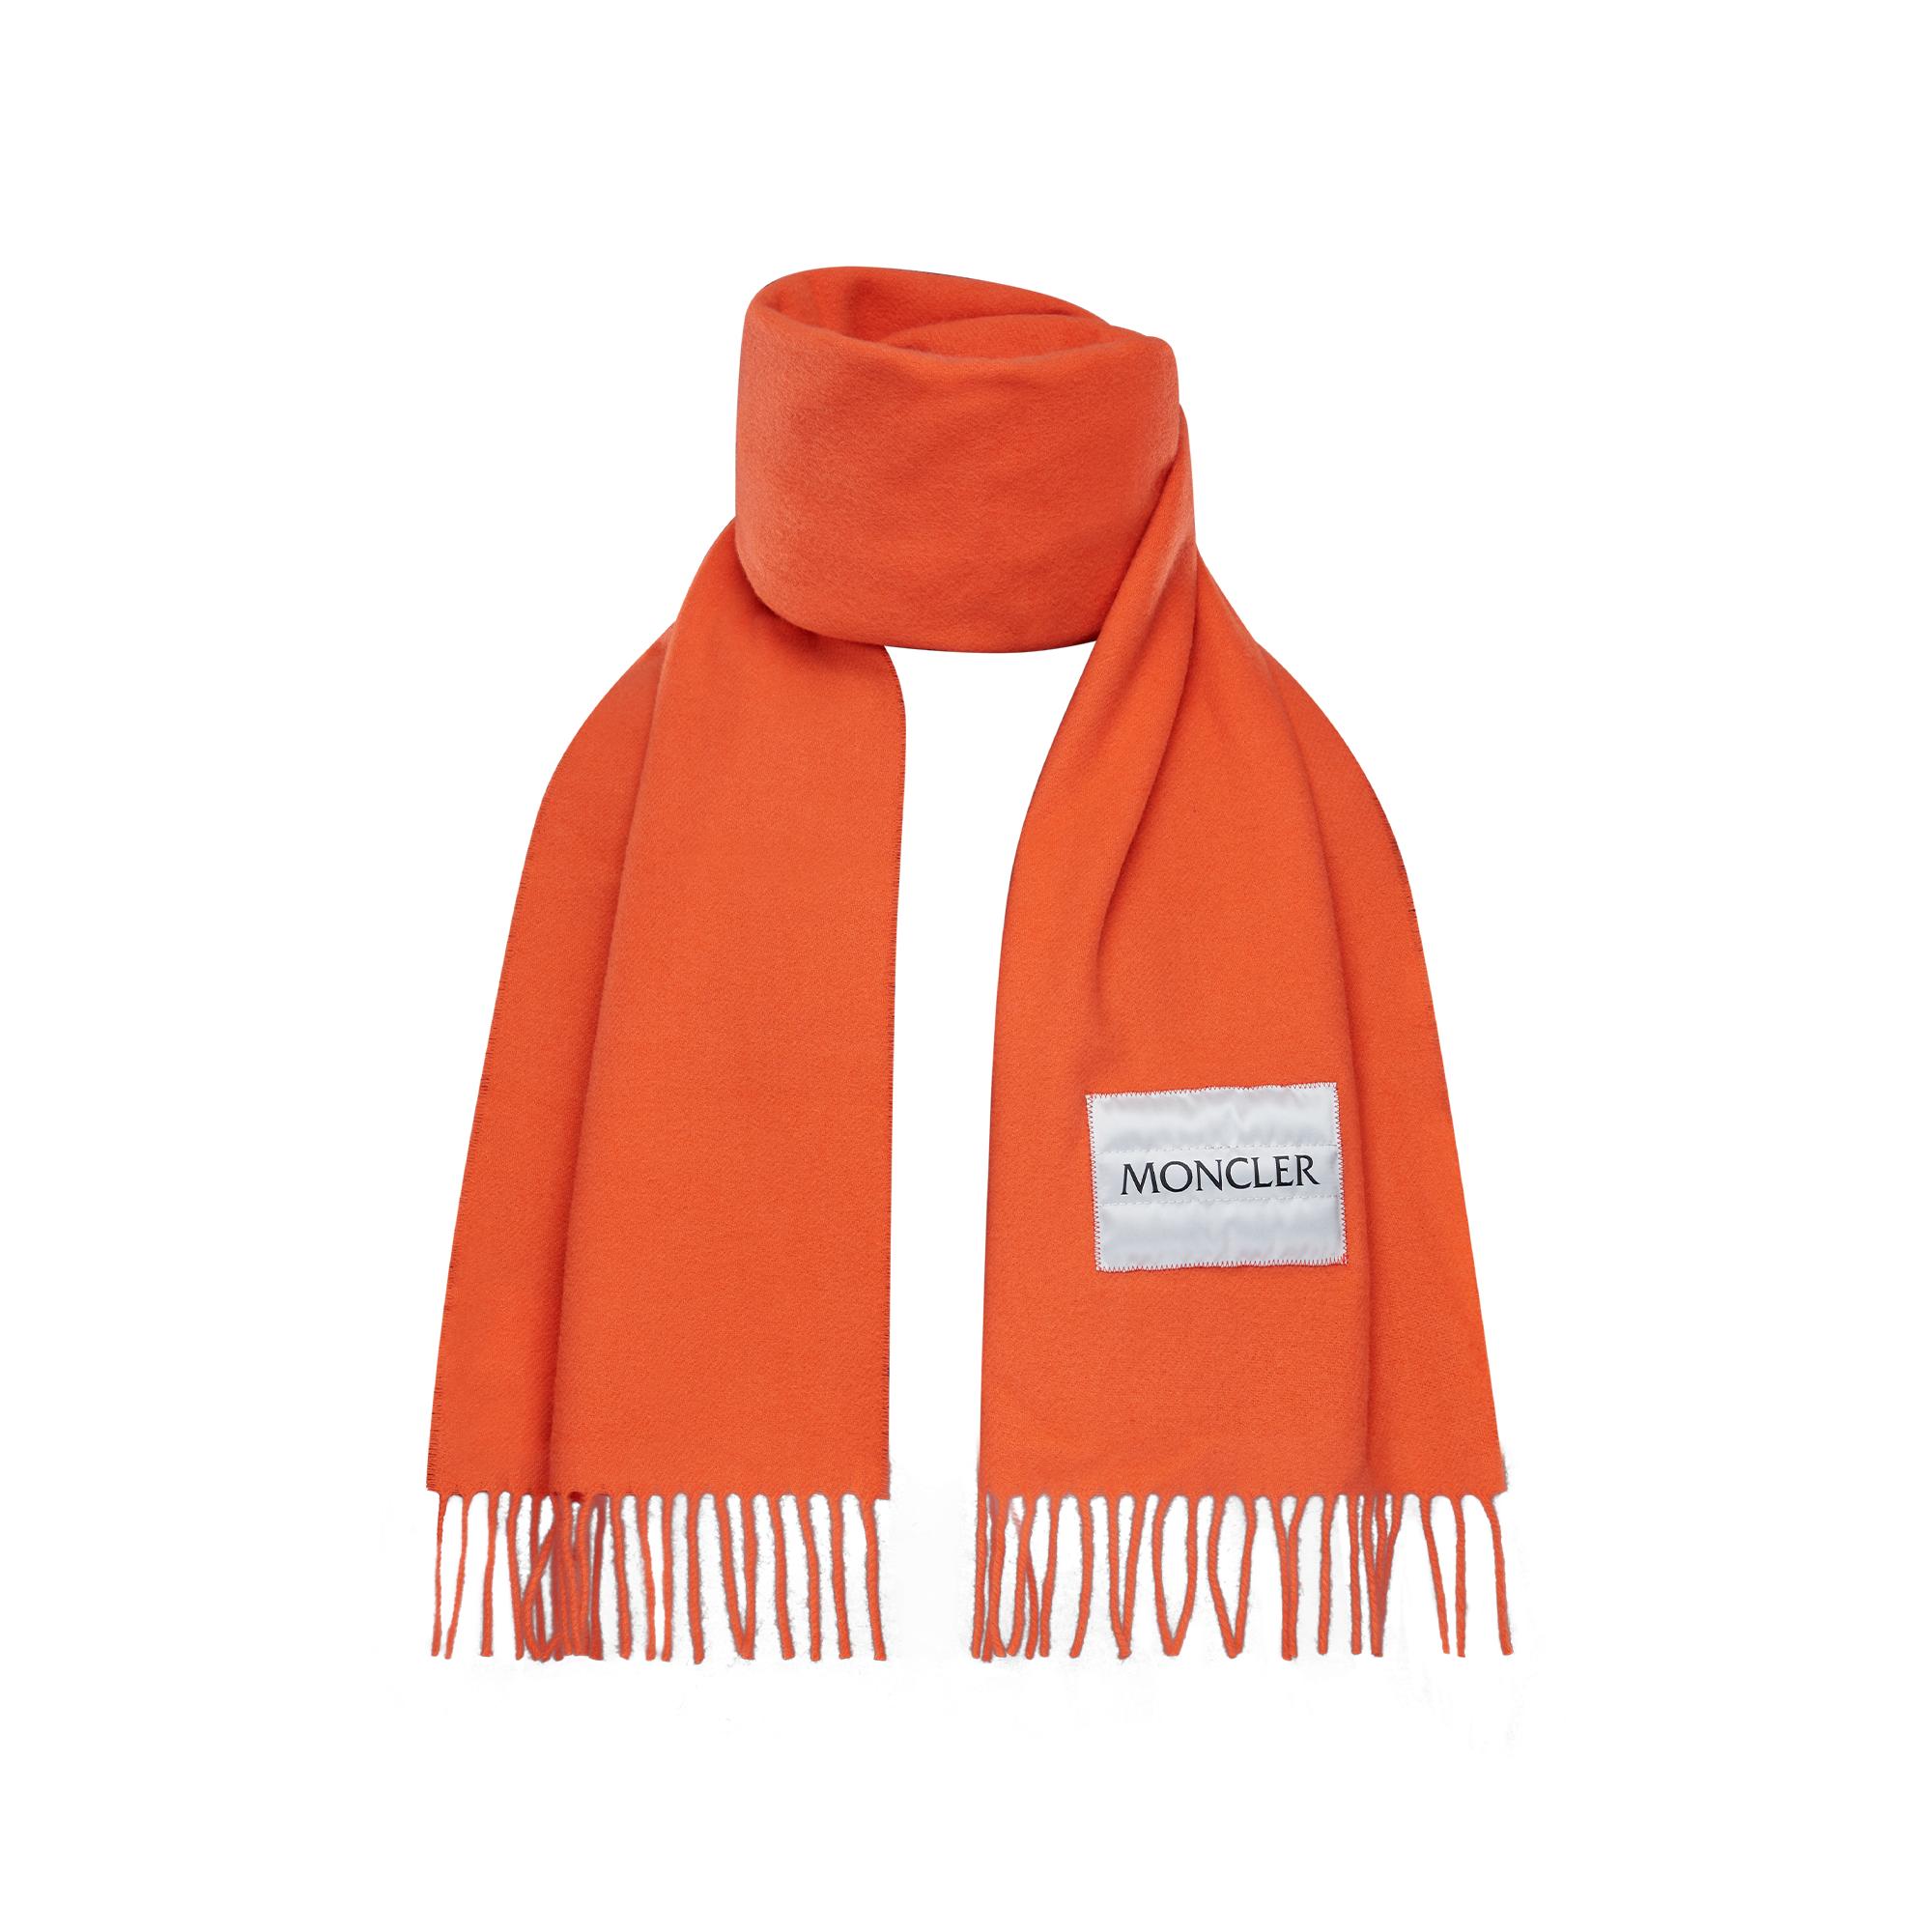 Moncler Wool Scarf in Orange - Lyst